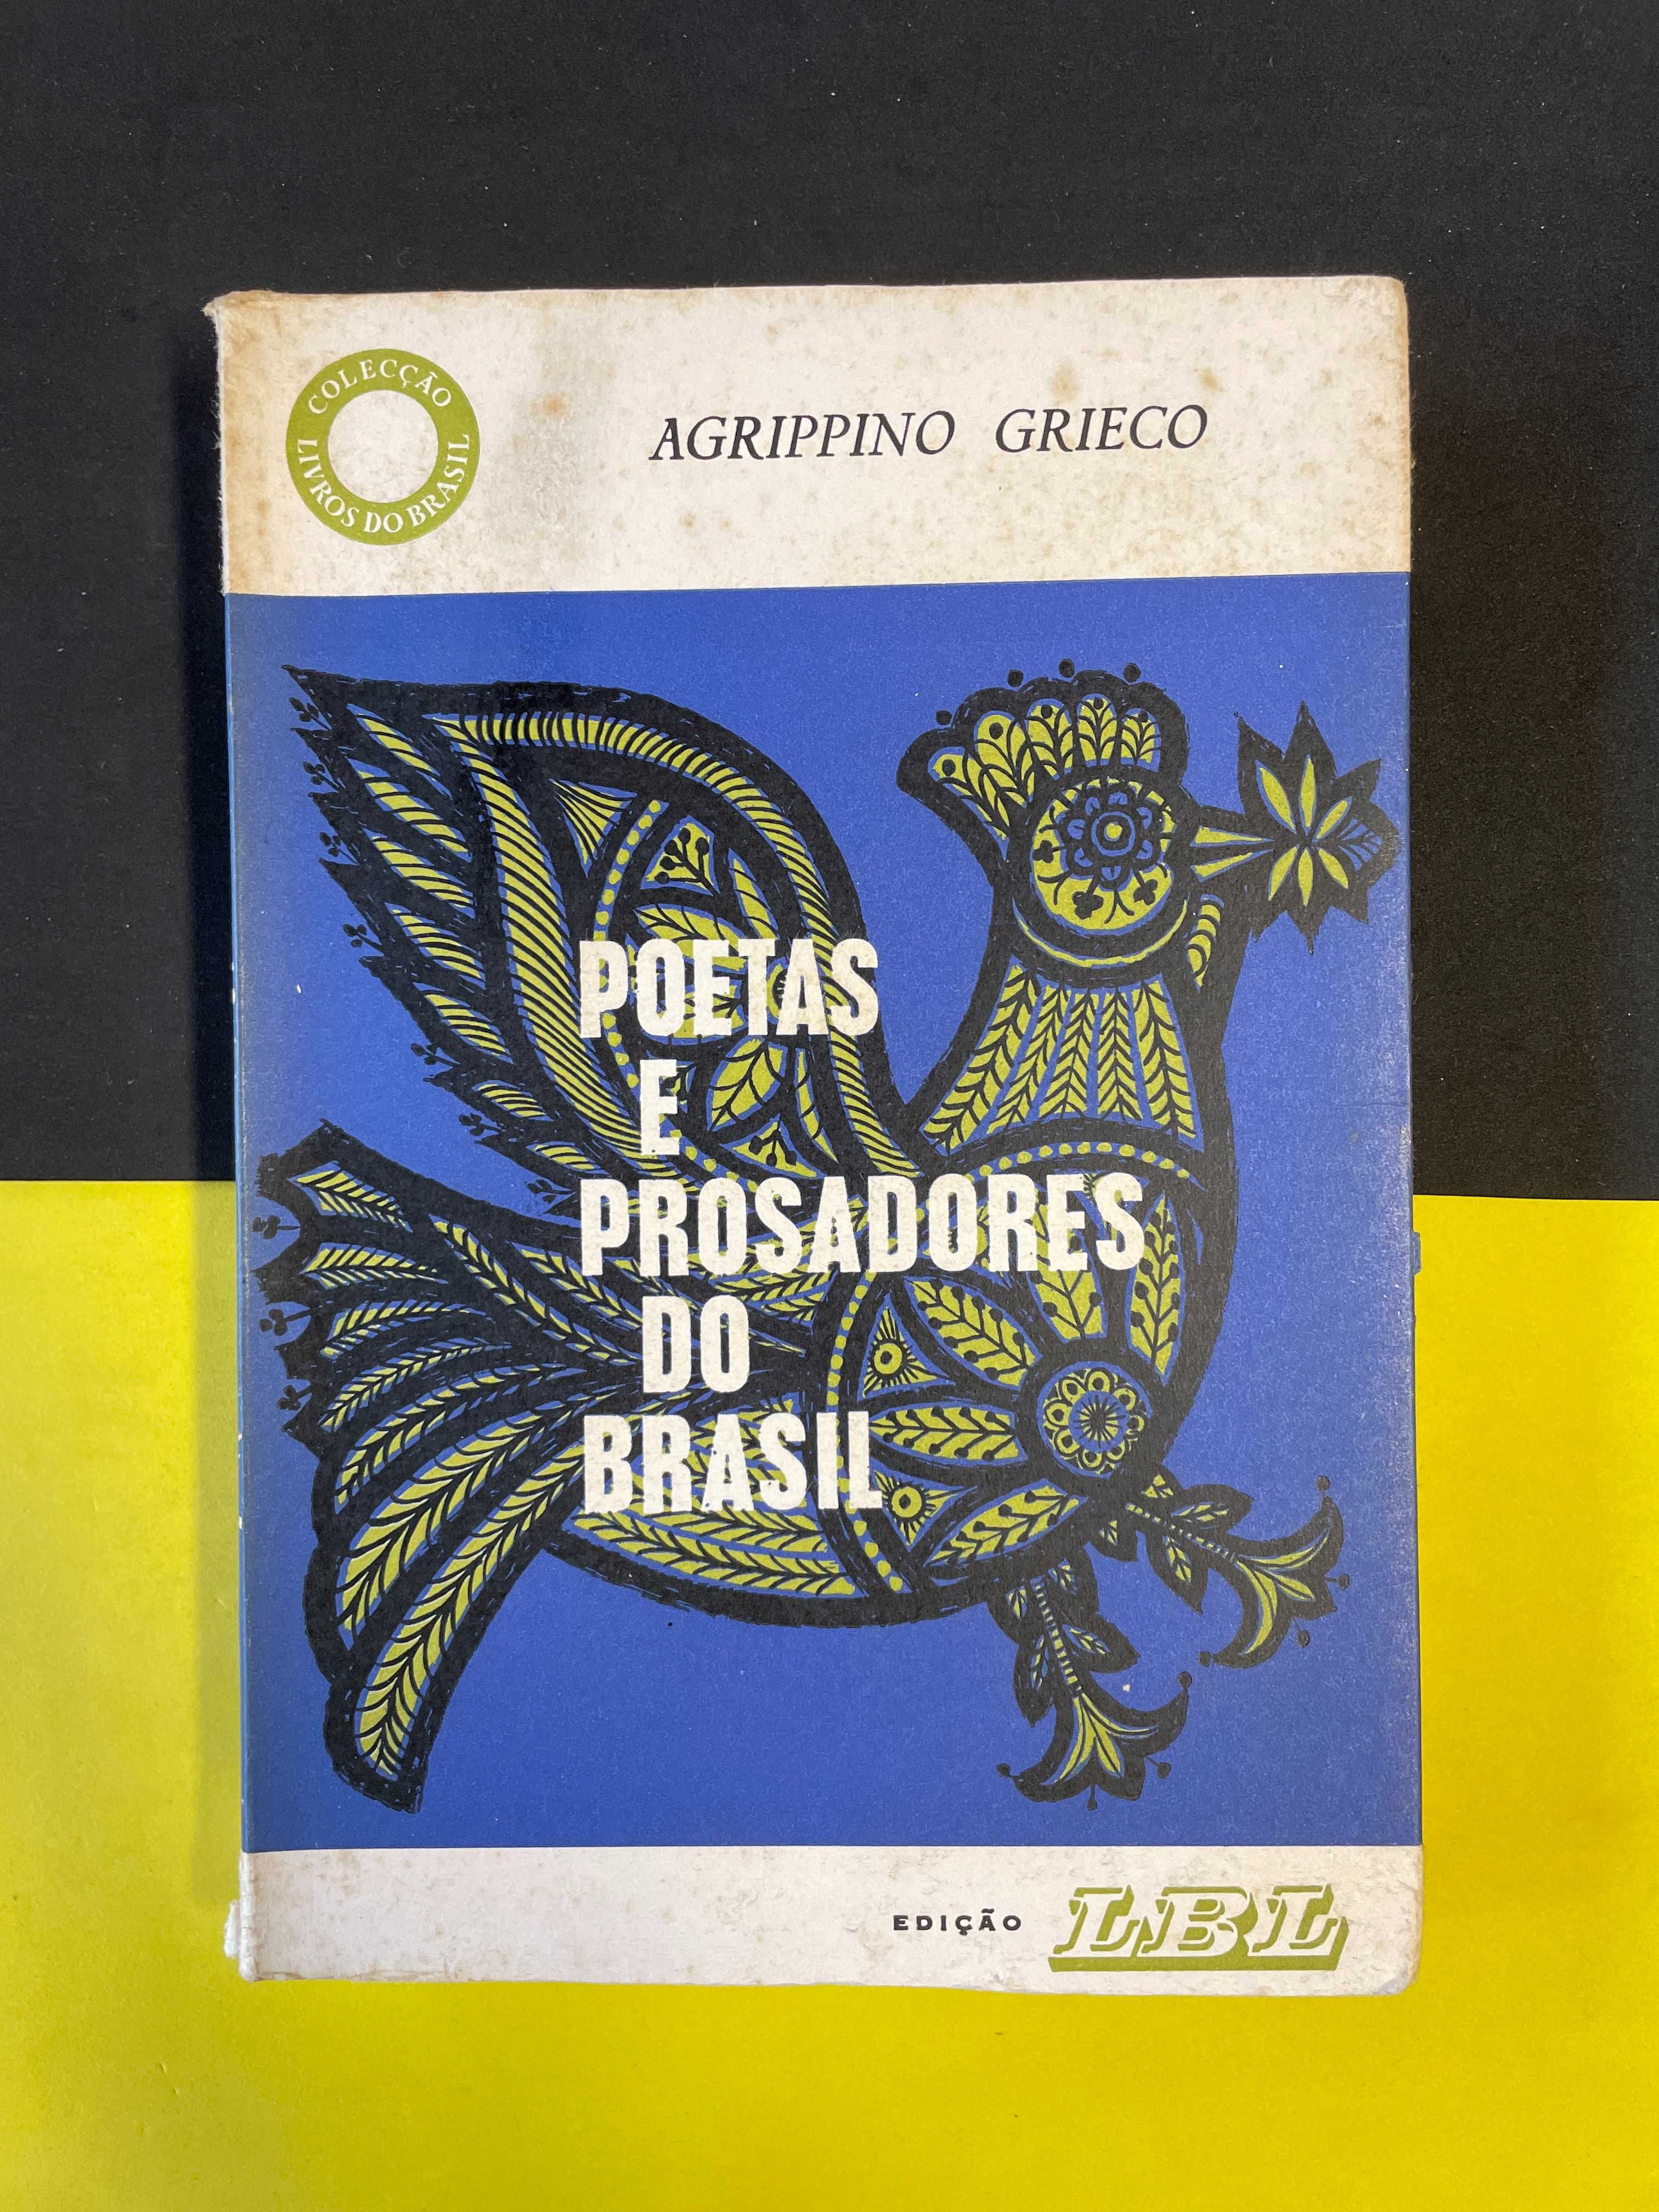 Agrippino Grieco - Poetas e prosadores do Brasil